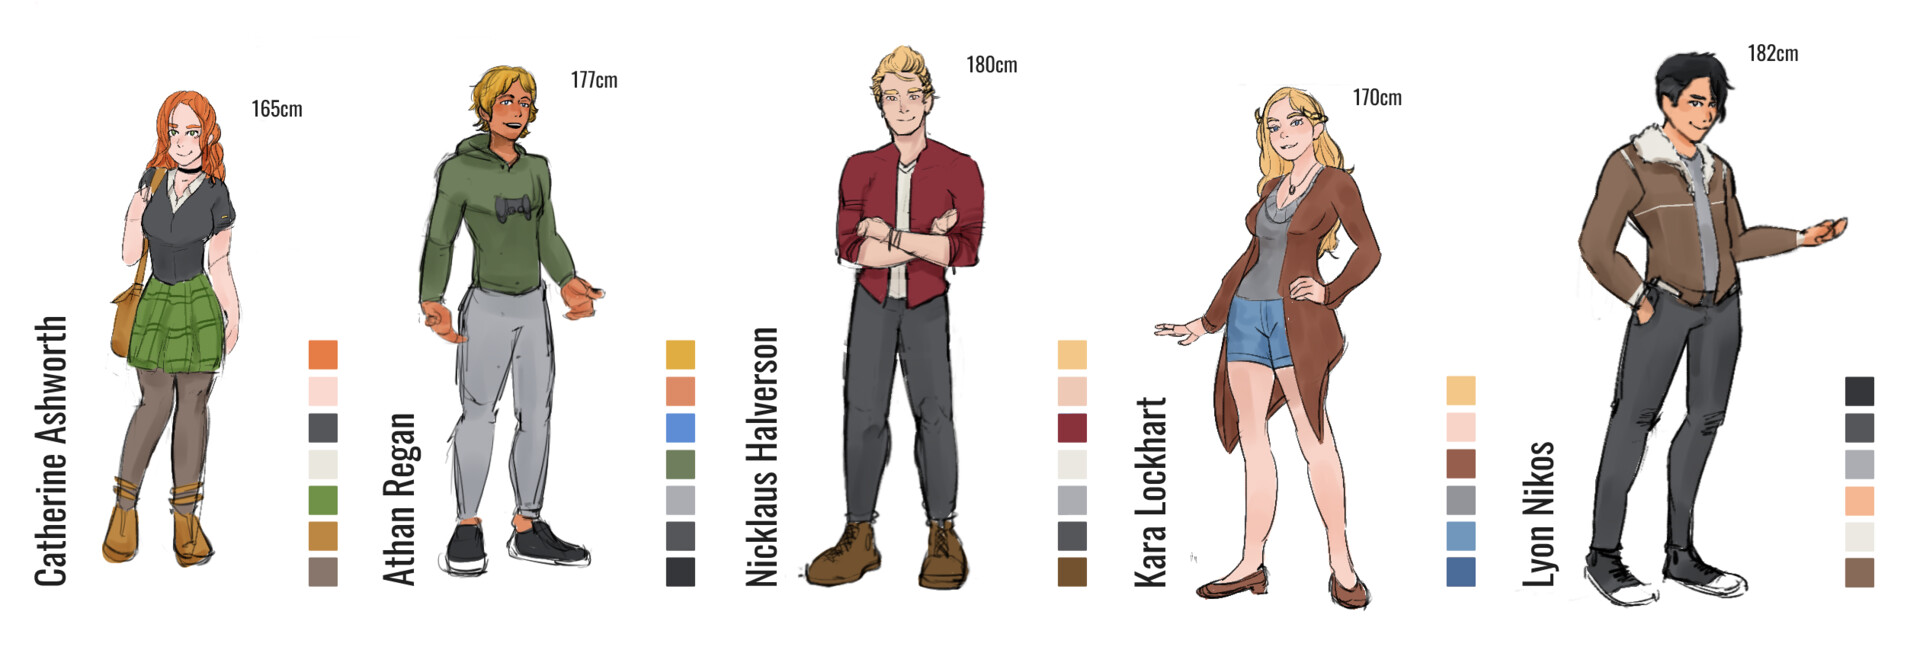 ArtStation - Character Height - Unpublished Comic